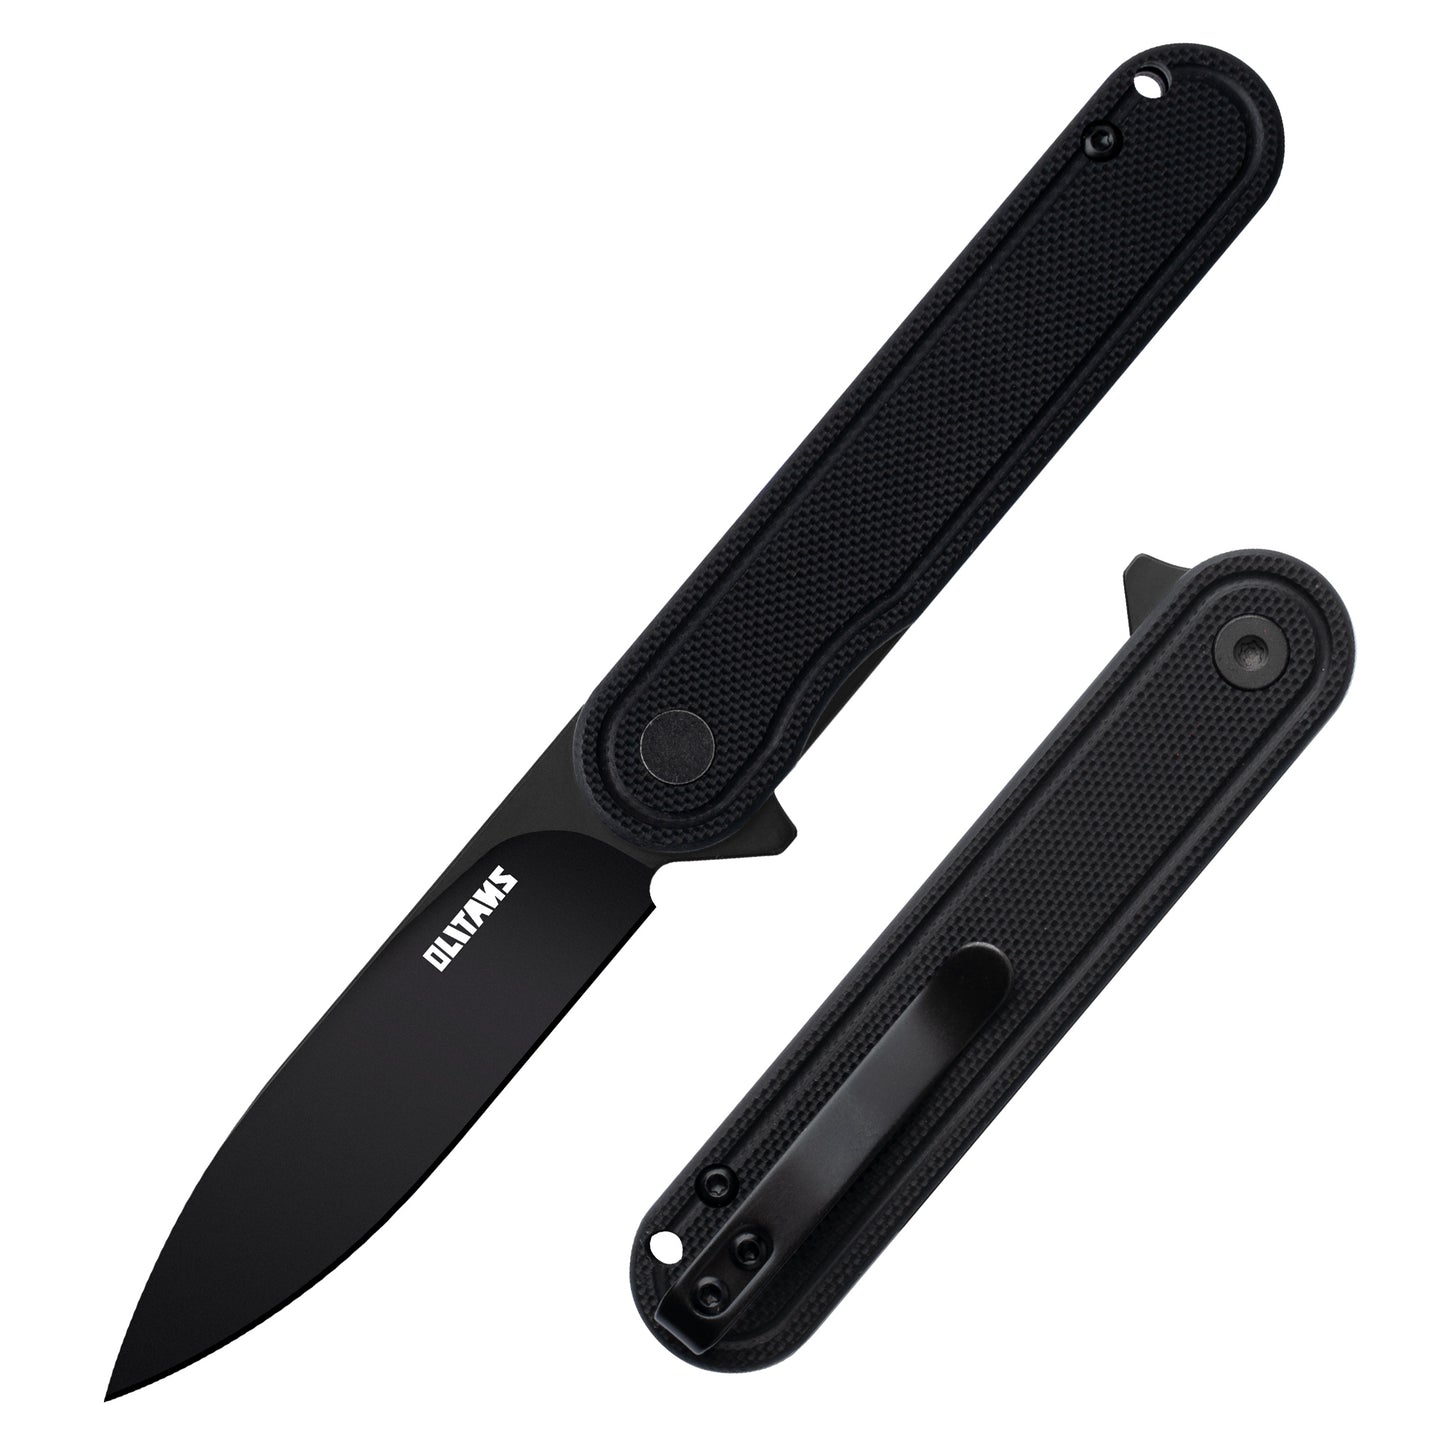 OLITANS G040 Pocket Knife , 2.75'' D2 Steel Blade G10 handle, Small EDC Knife with Pocket Clip for Men Women, Mini folding Camping knife  2.1oz